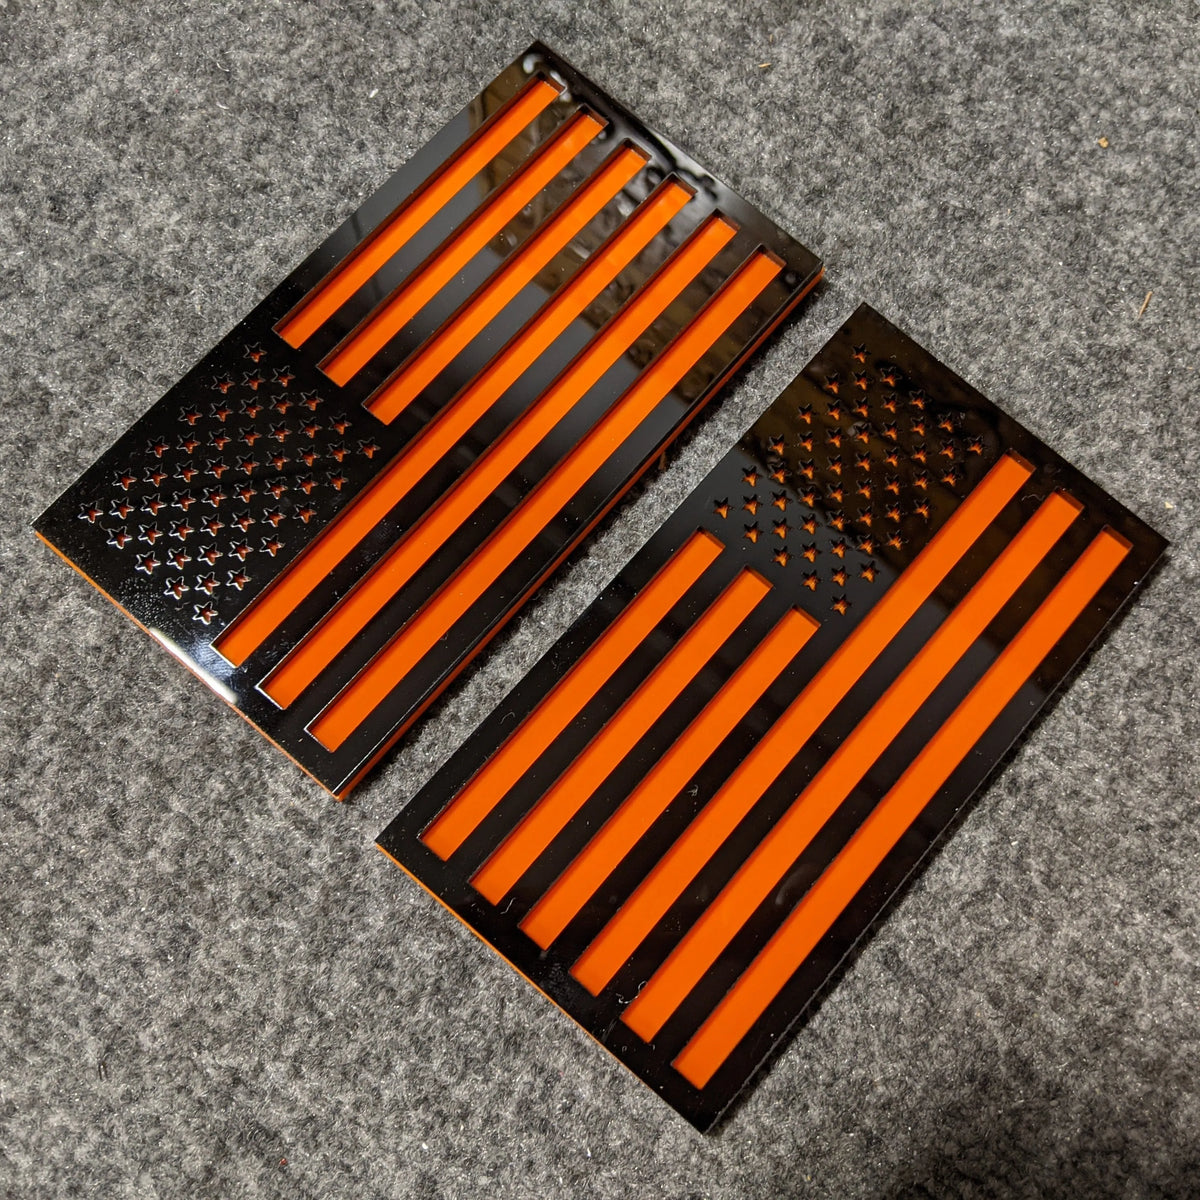 American Flag Fender Badges - Pair - Universal Fit - Black on Orange